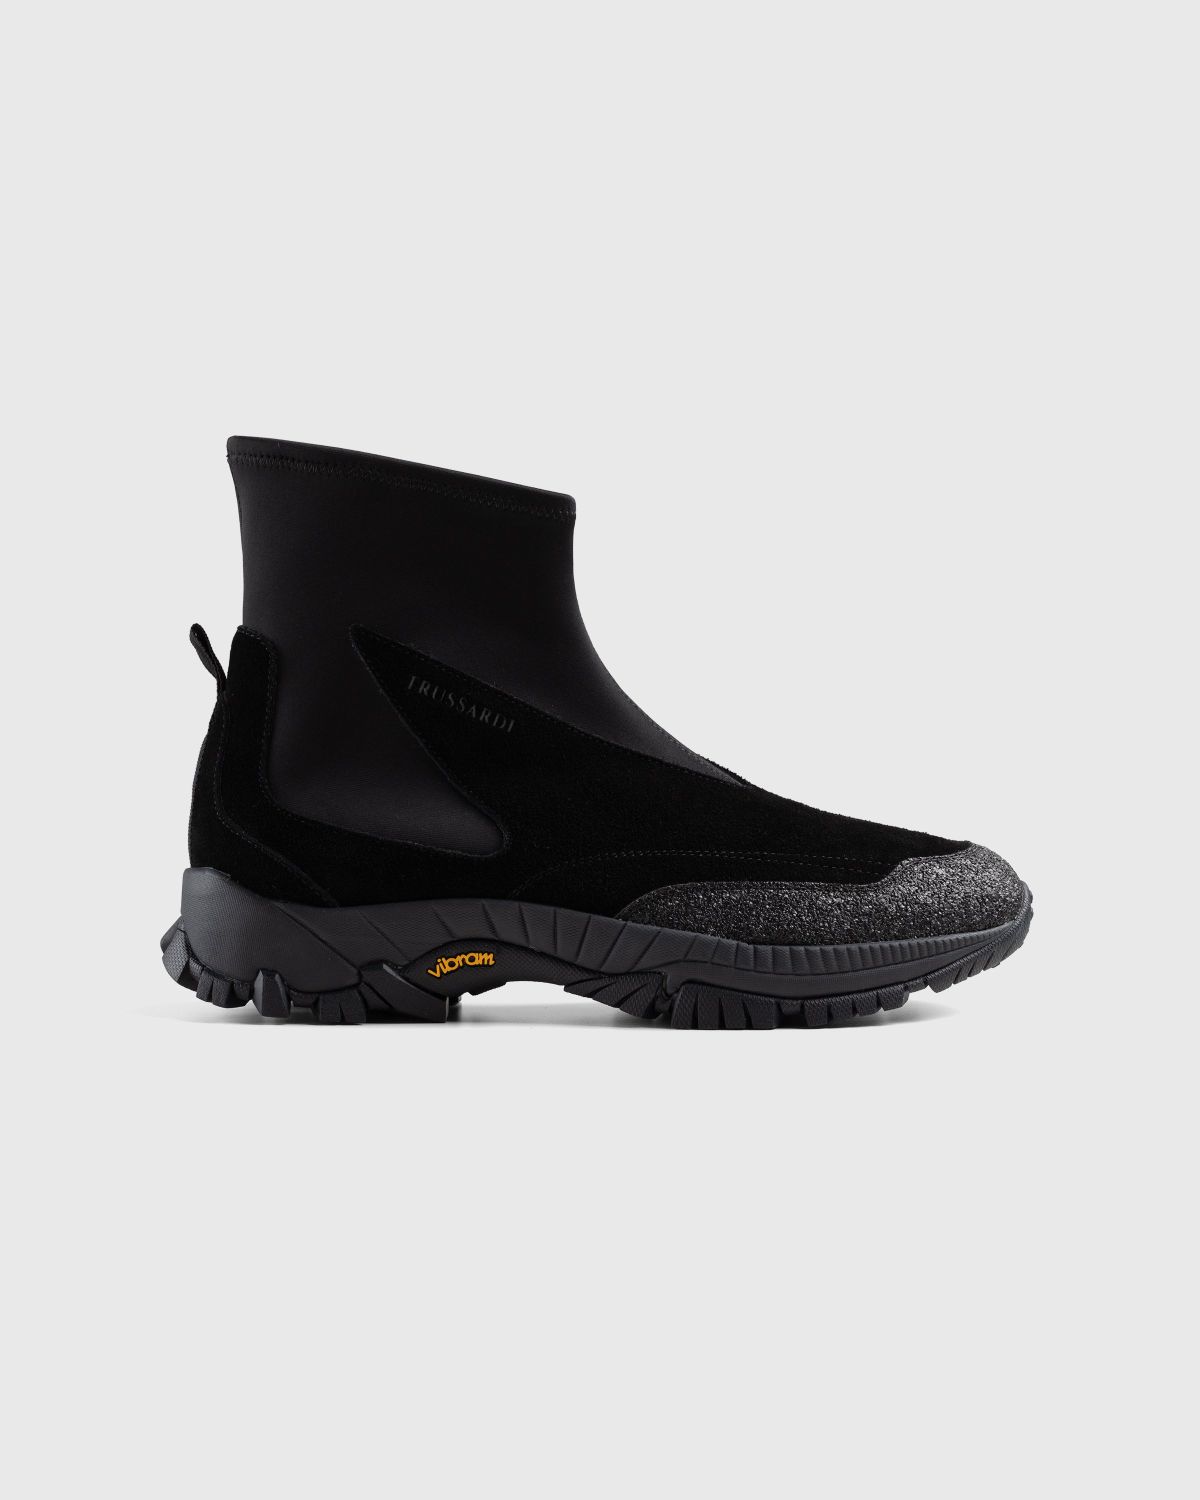 Trussardi – Neo Sock Sneaker Black - Low Top Sneakers - Black - Image 1